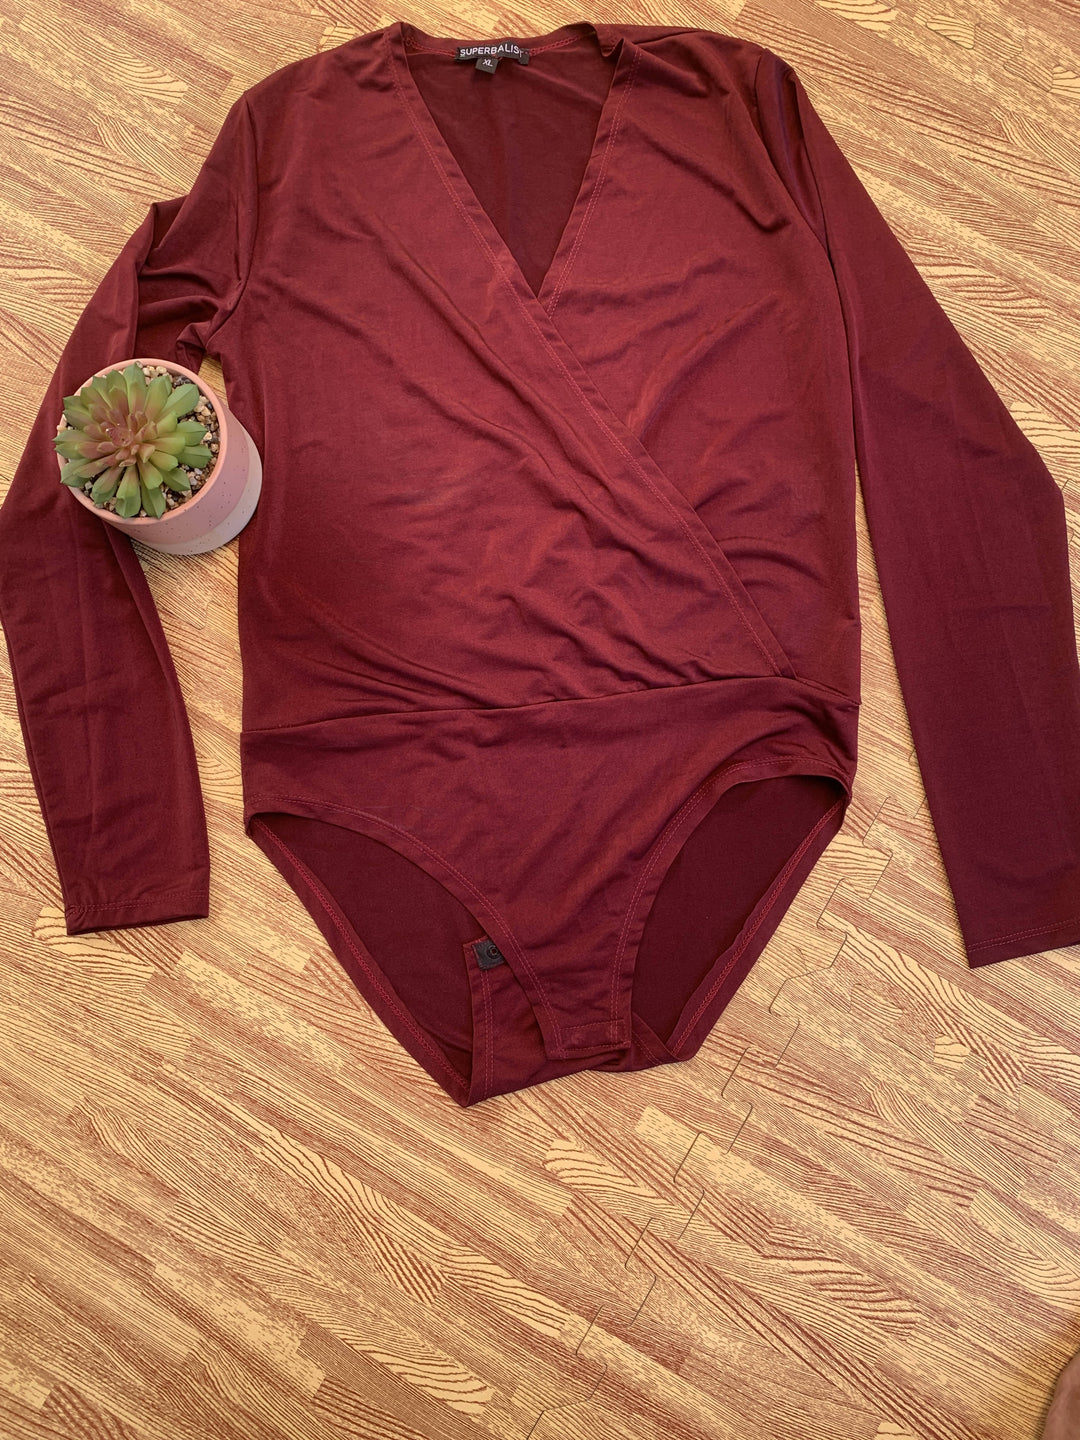 Image of Burgundy Silky Low Cut Bodysuit